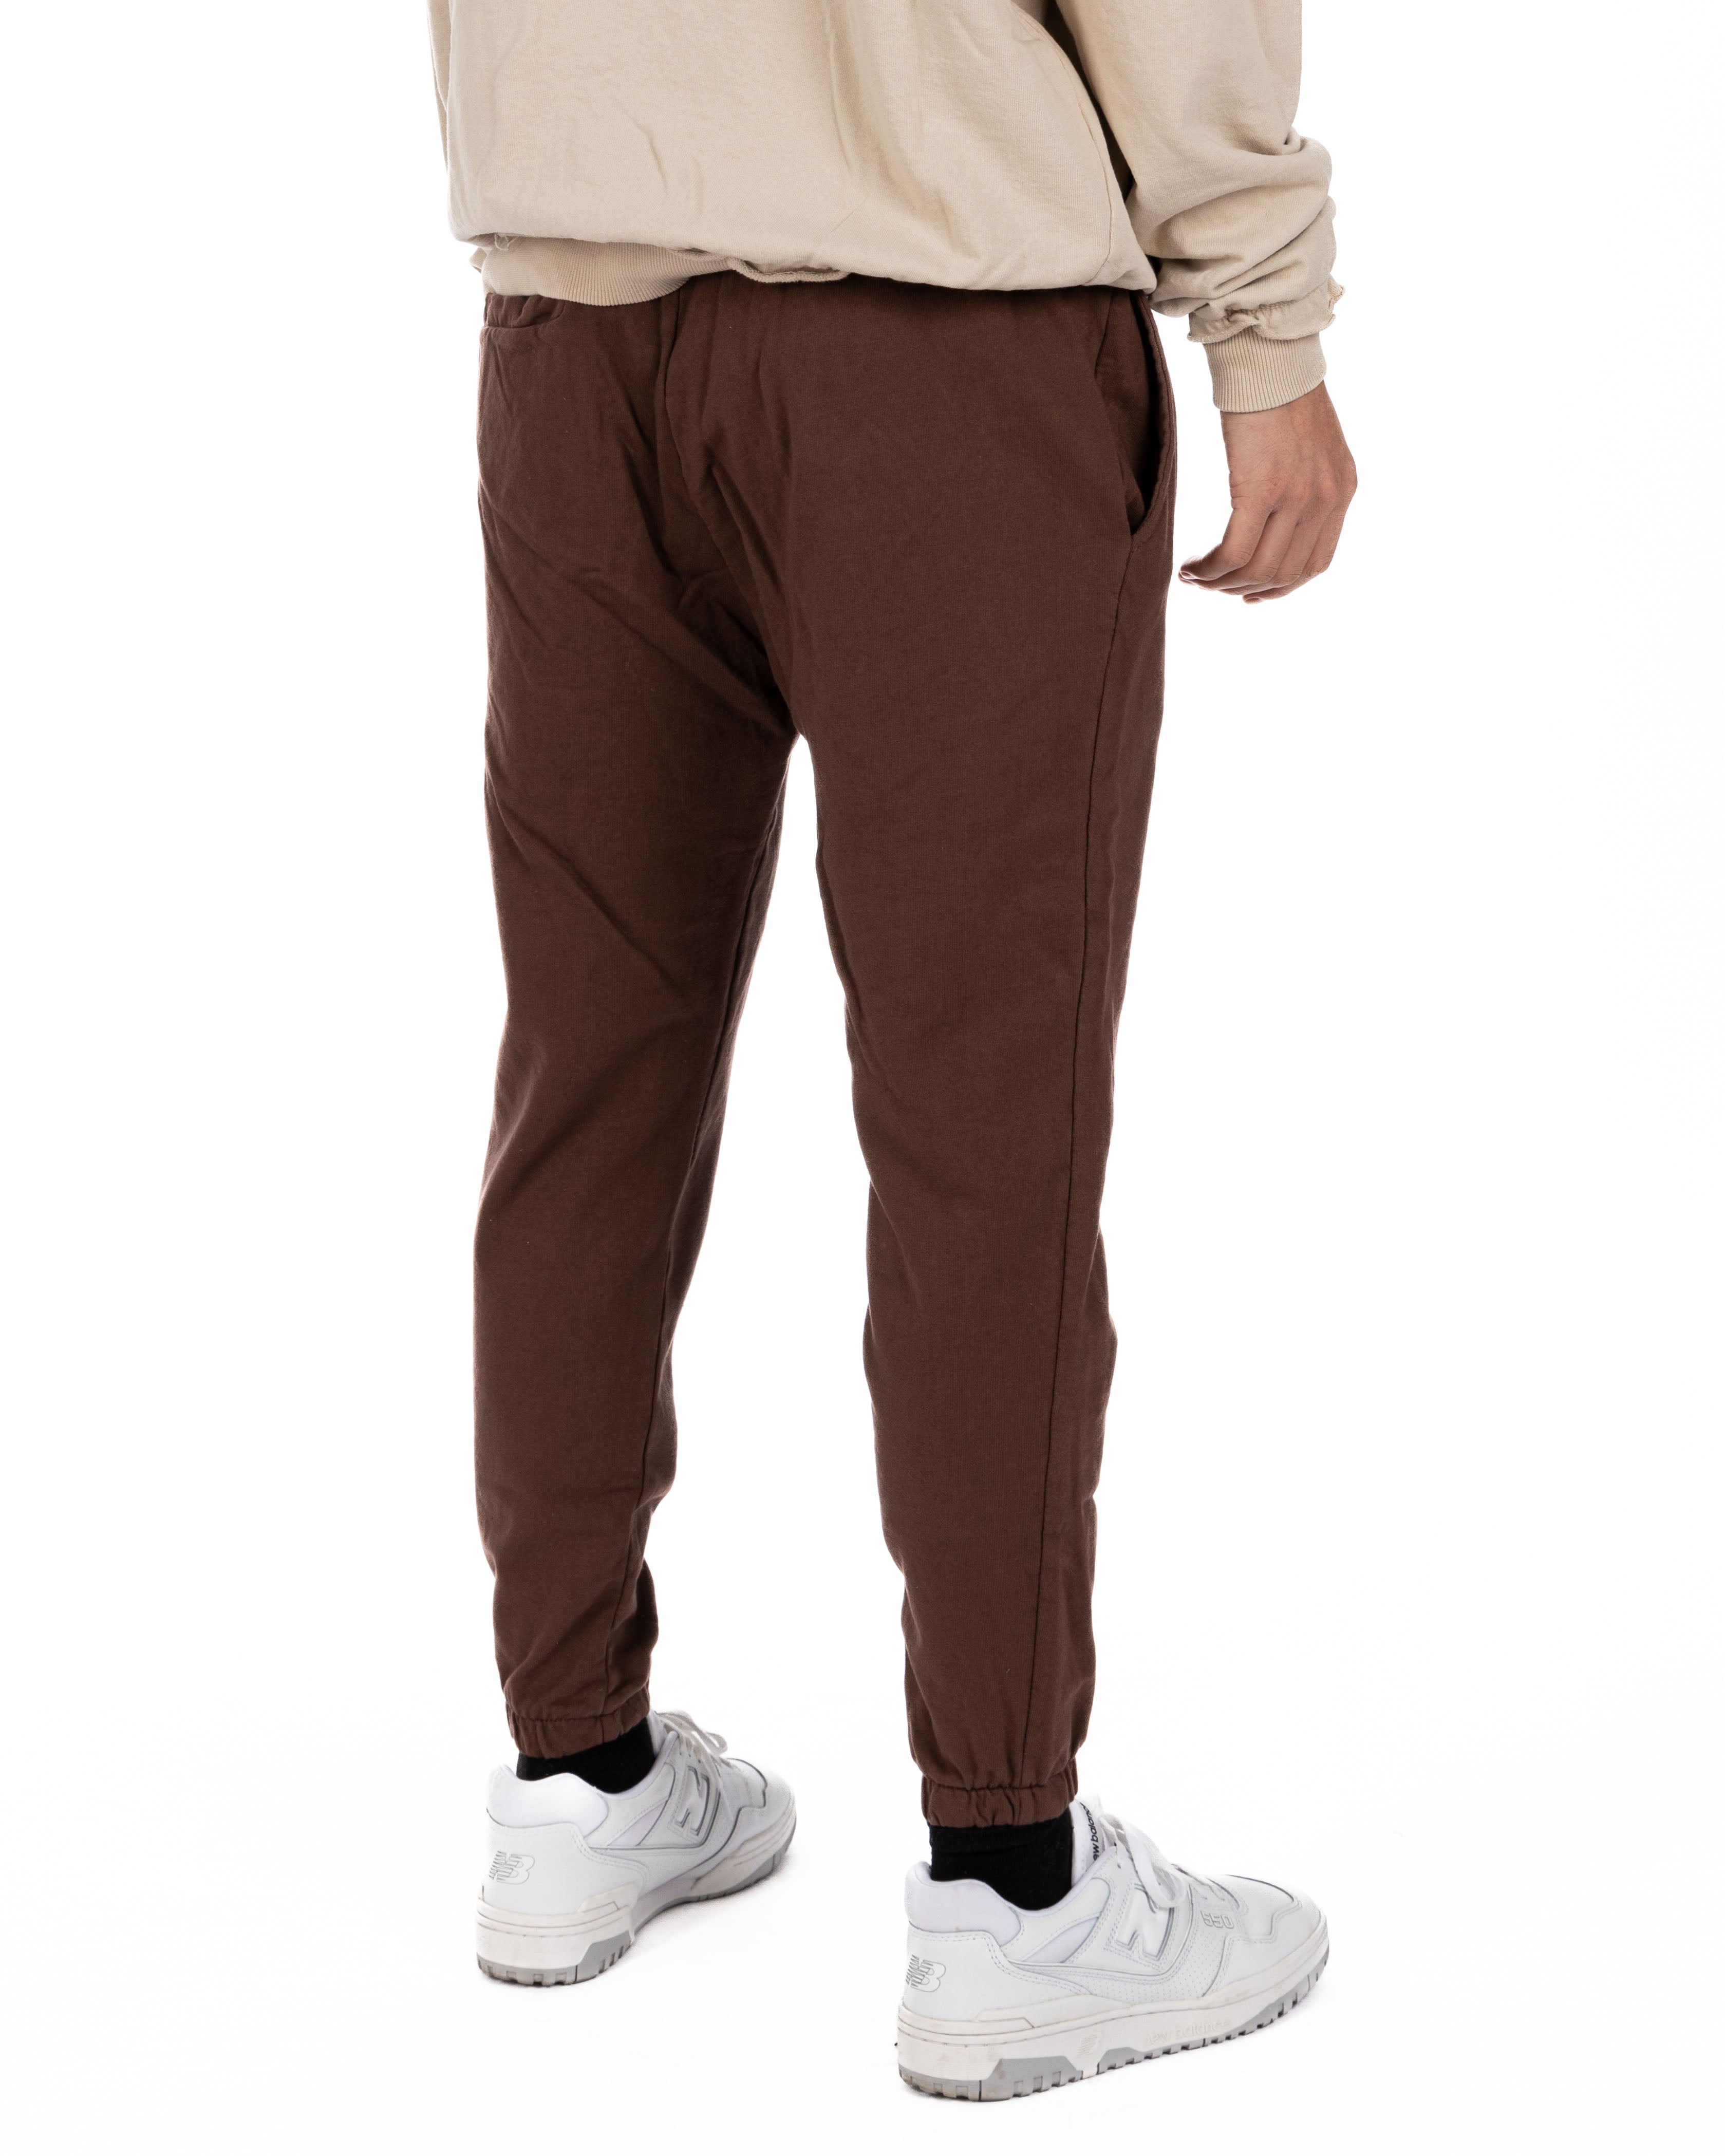 Hans - dark brown tracksuit trousers